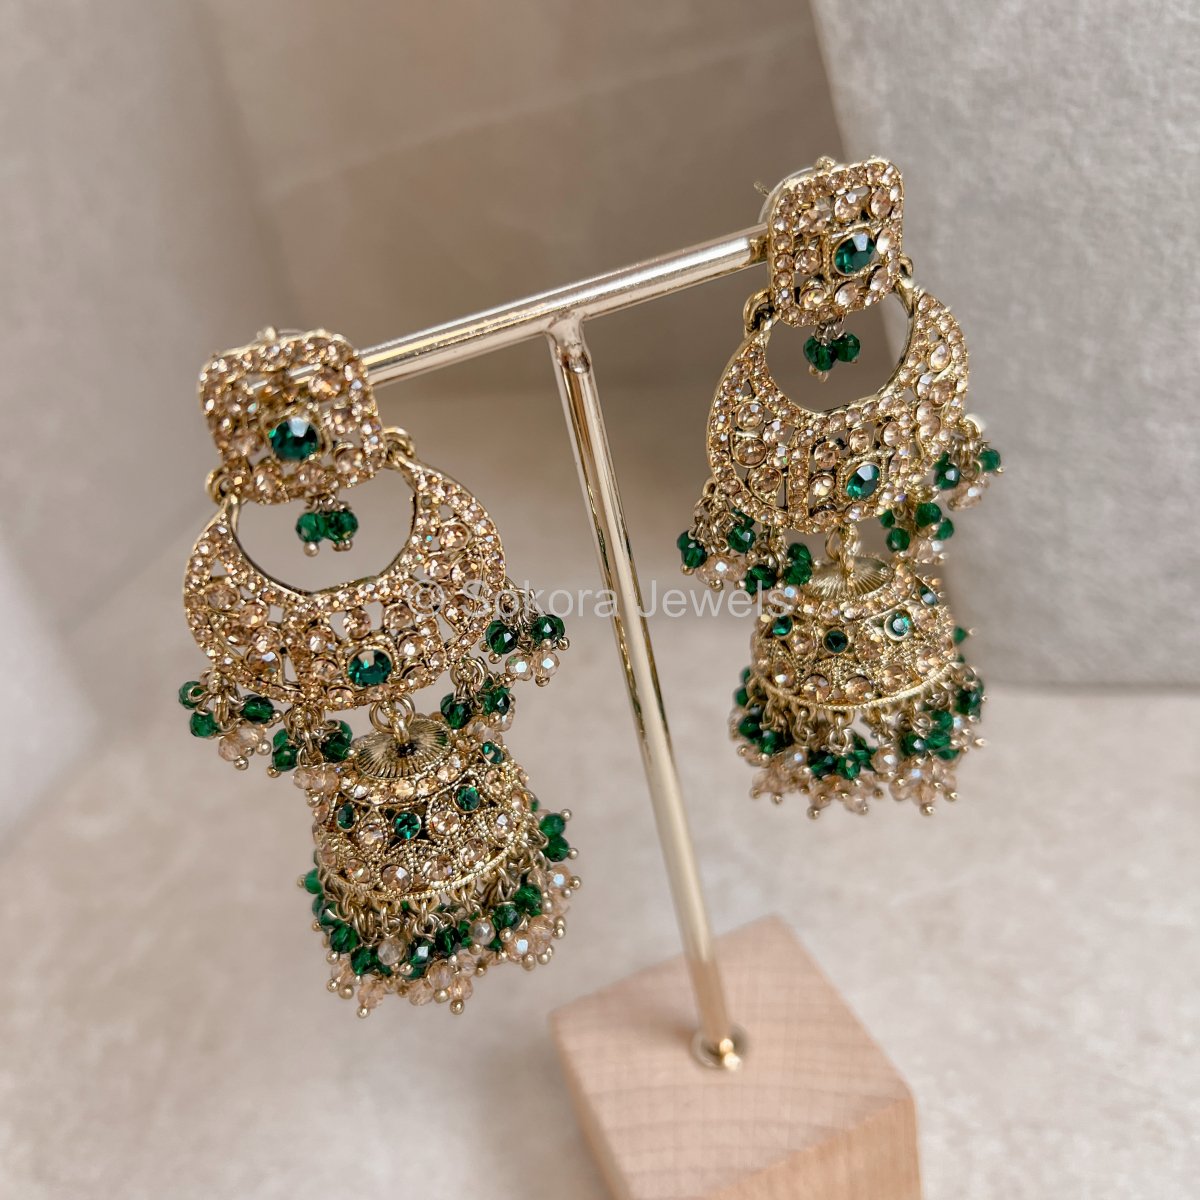 Qudsia Jhuma Earrings - Green - SOKORA JEWELSQudsia Jhuma Earrings - Green